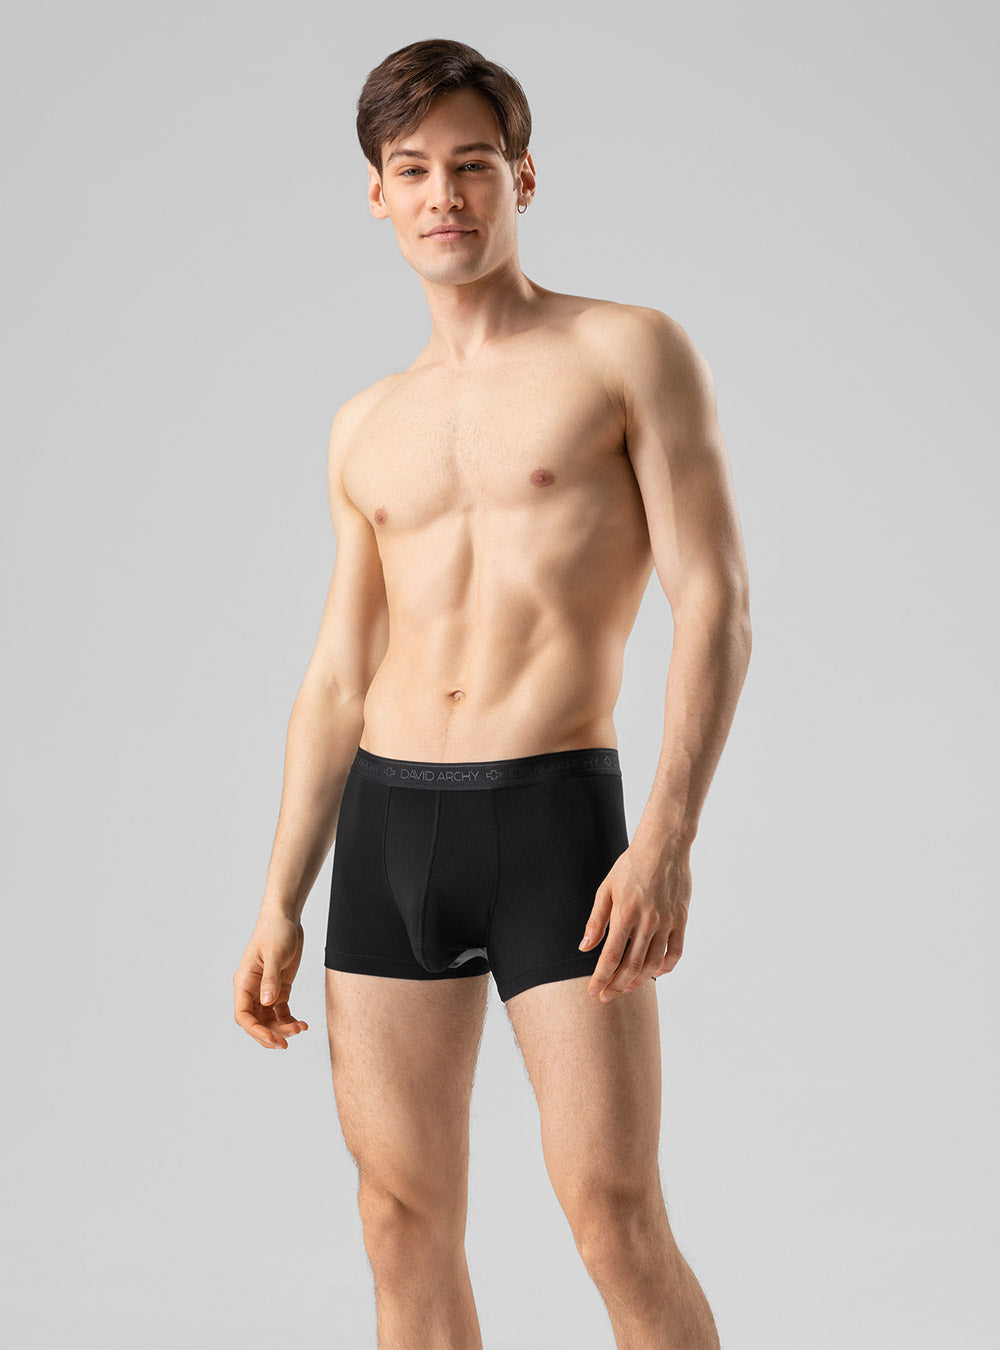 Separatec Men's Soft Micro Modal Separate Pouch Underwear Long Leg Boxer